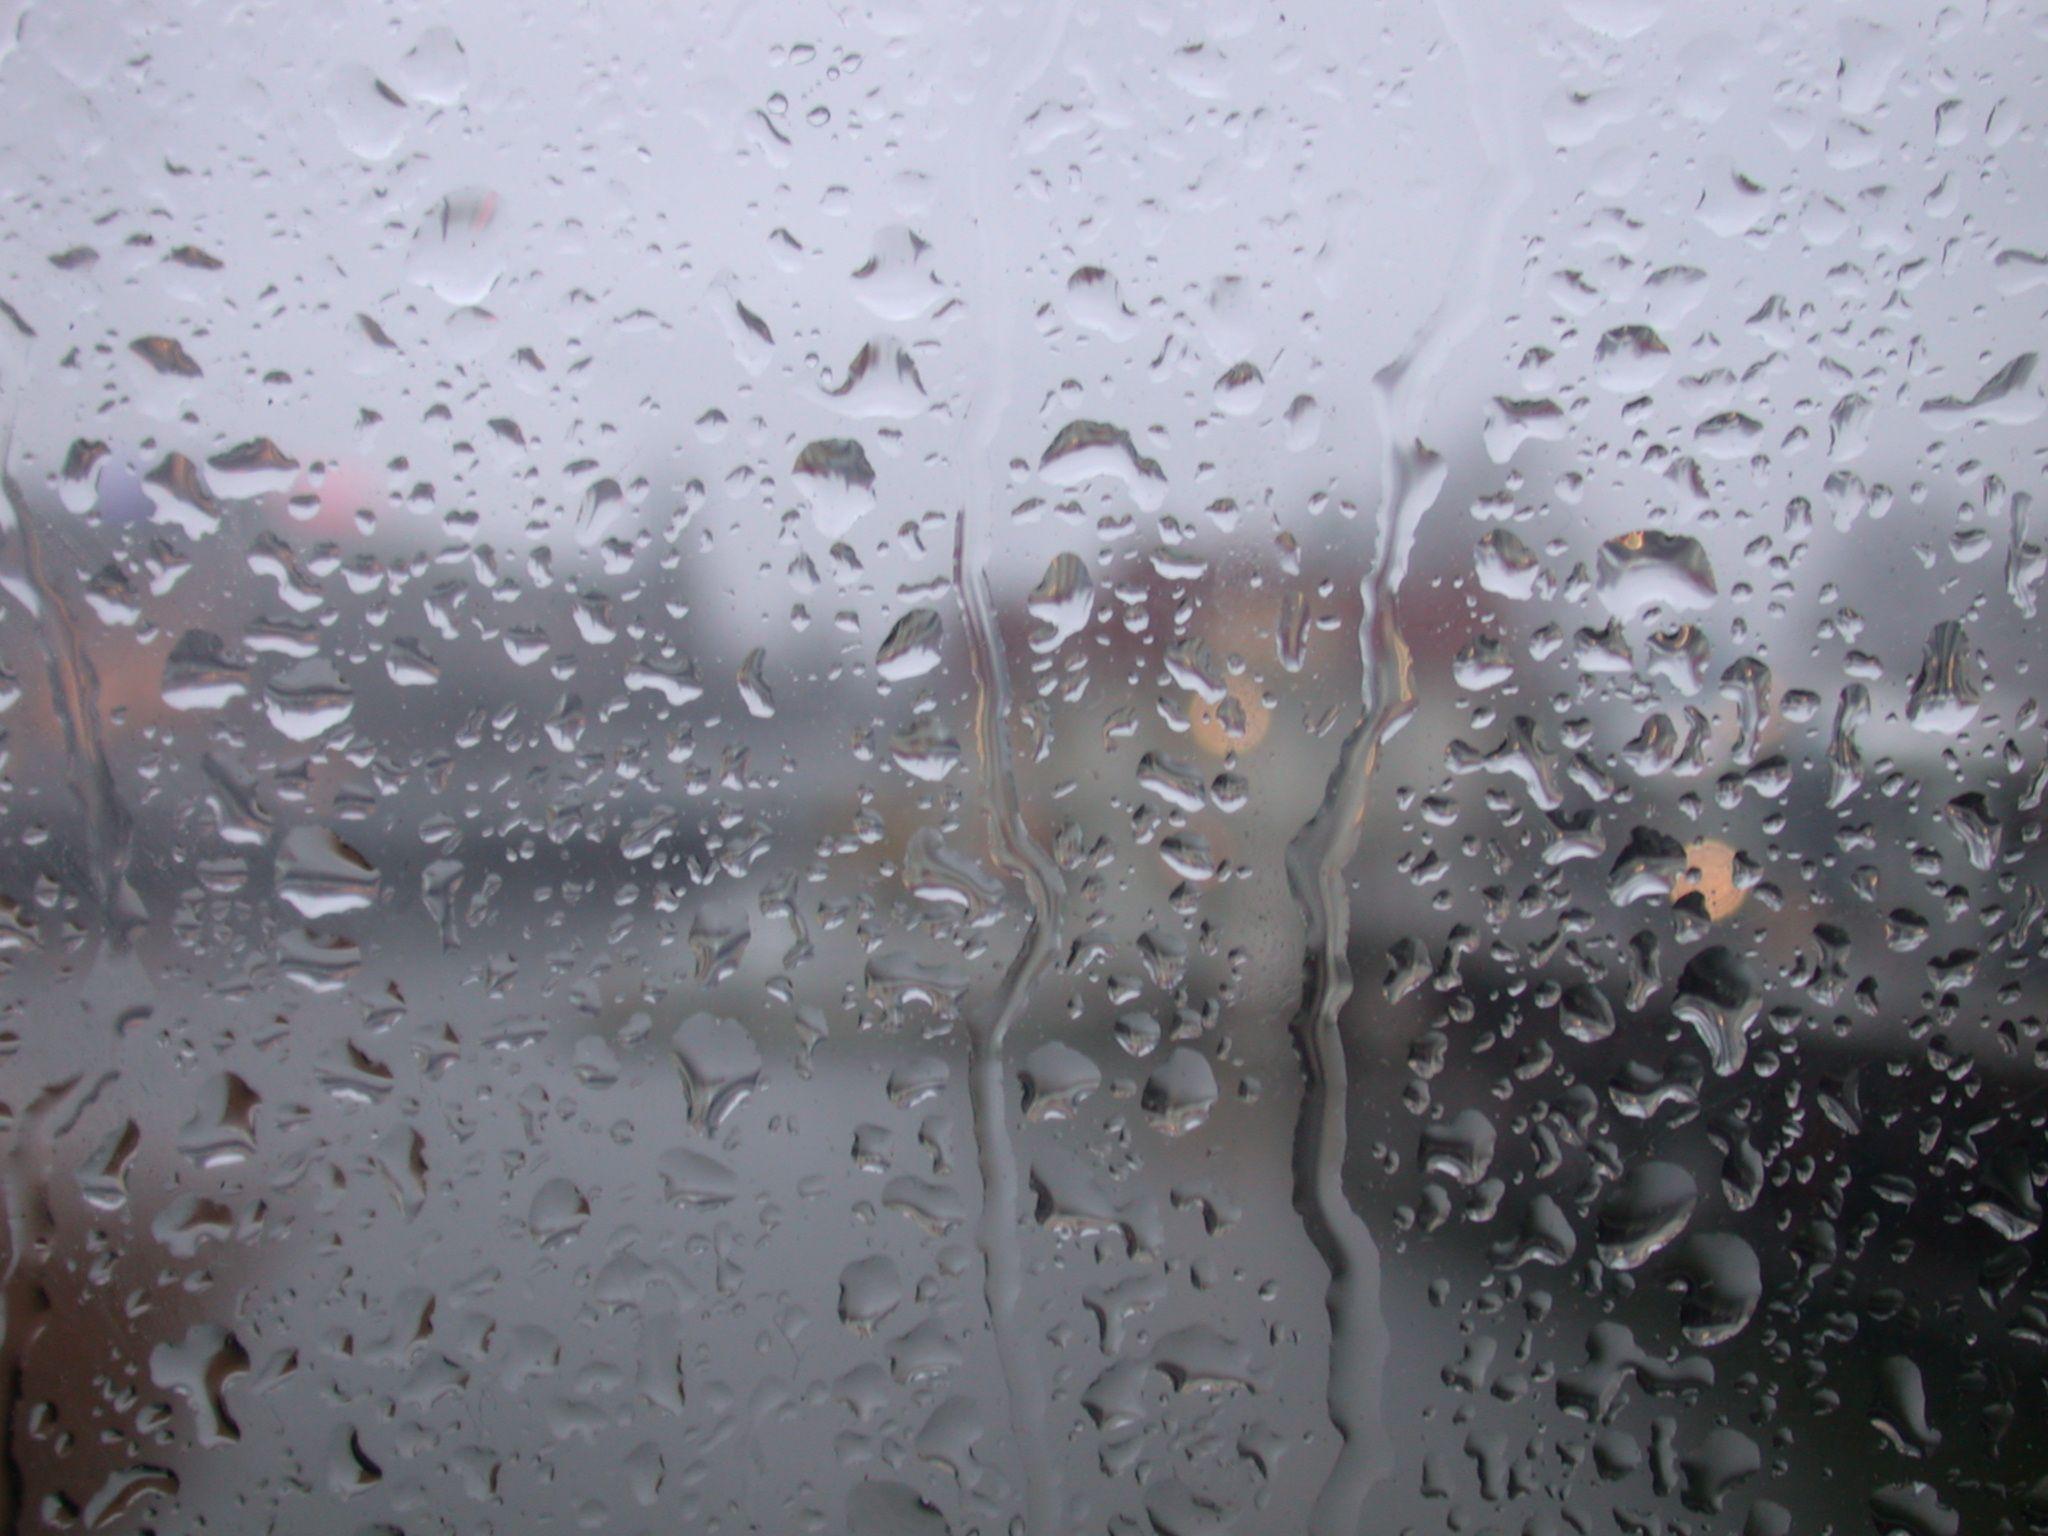 Rain On Window Wallpaper 2048x1536 px Free Download